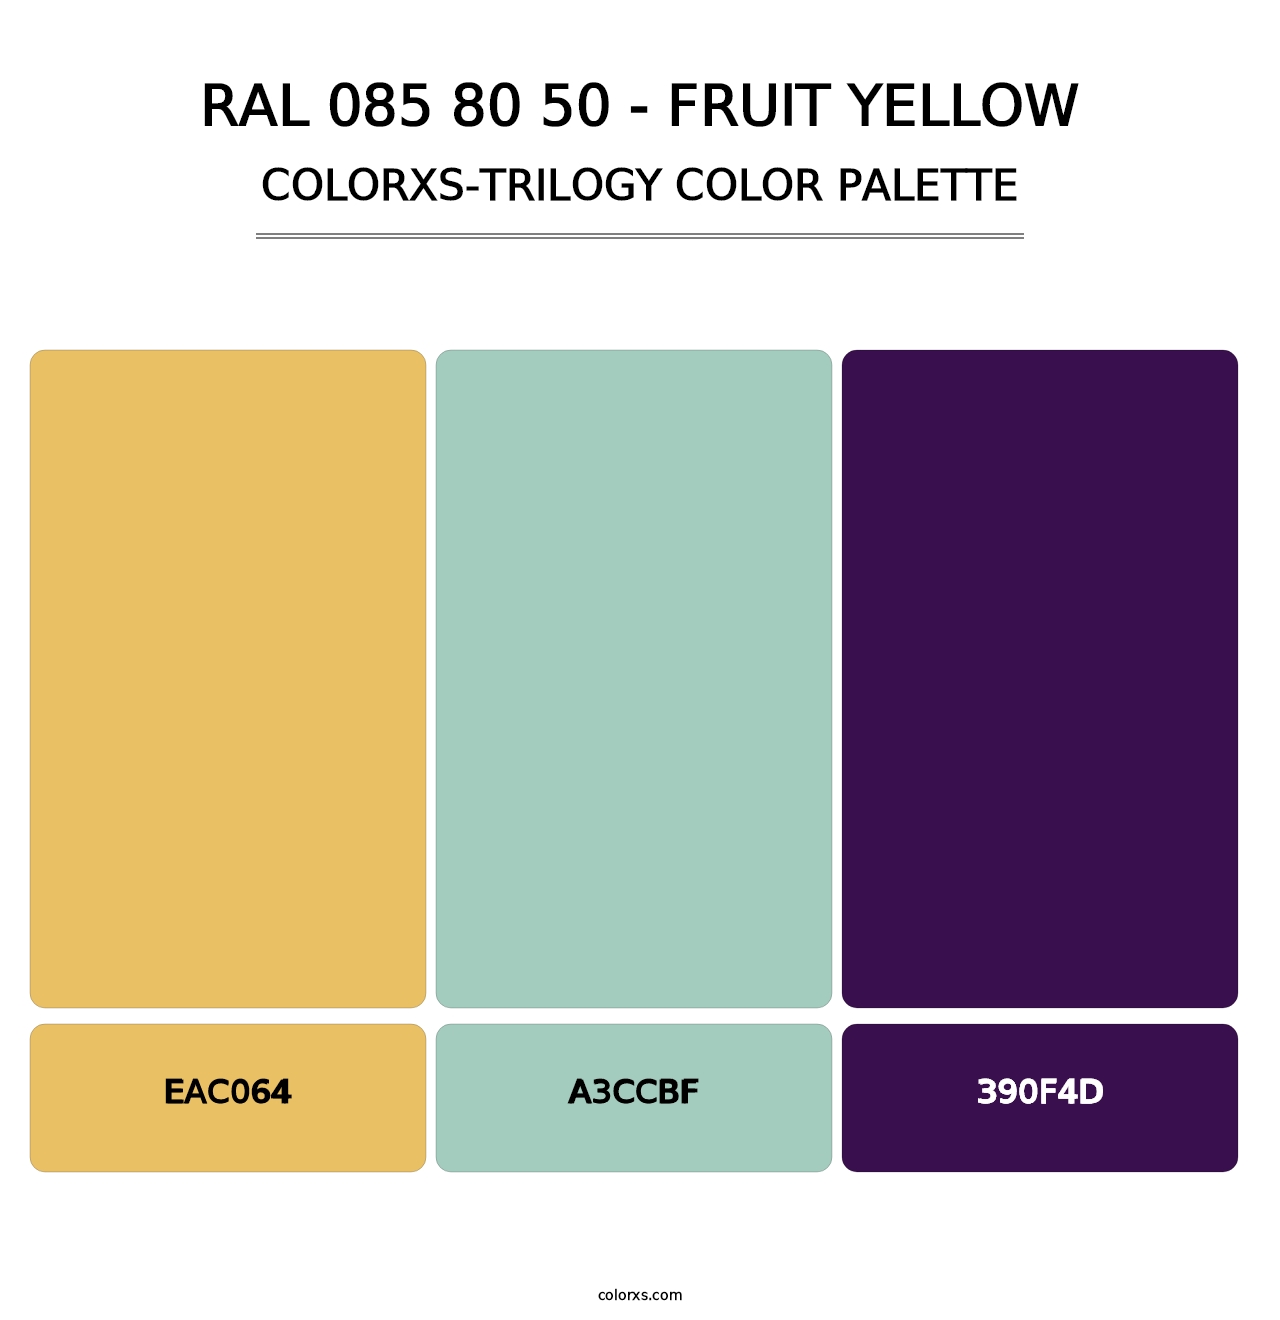 RAL 085 80 50 - Fruit Yellow - Colorxs Trilogy Palette